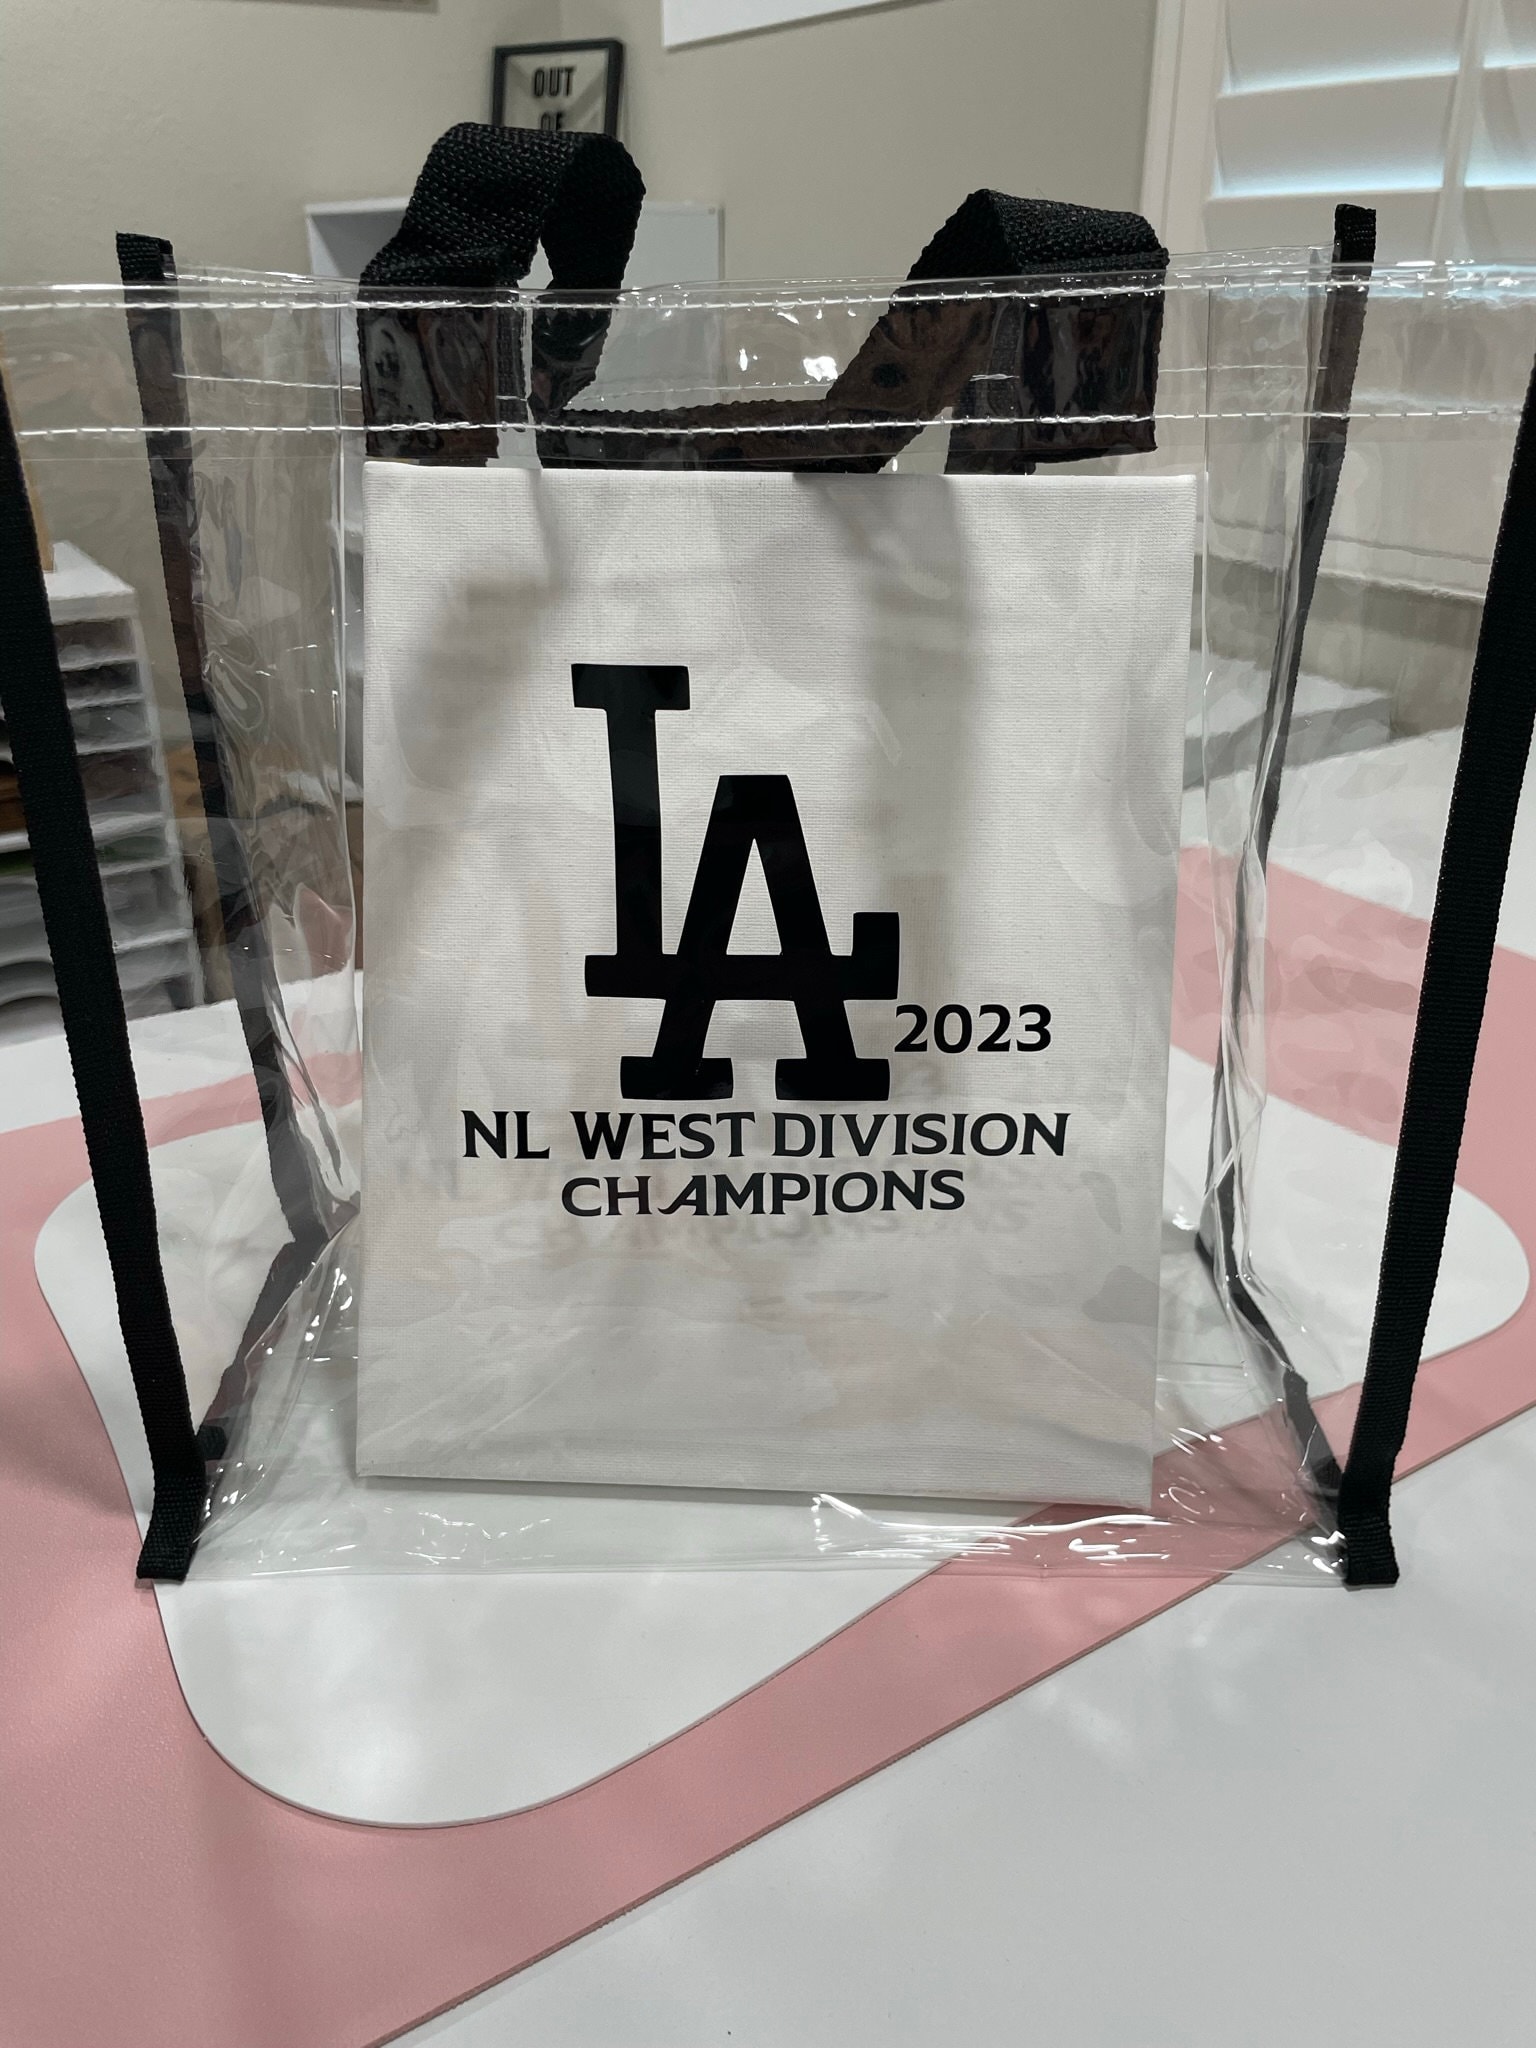 Los Angeles Dodgers Hype Stadium Crossbody Clear Bag